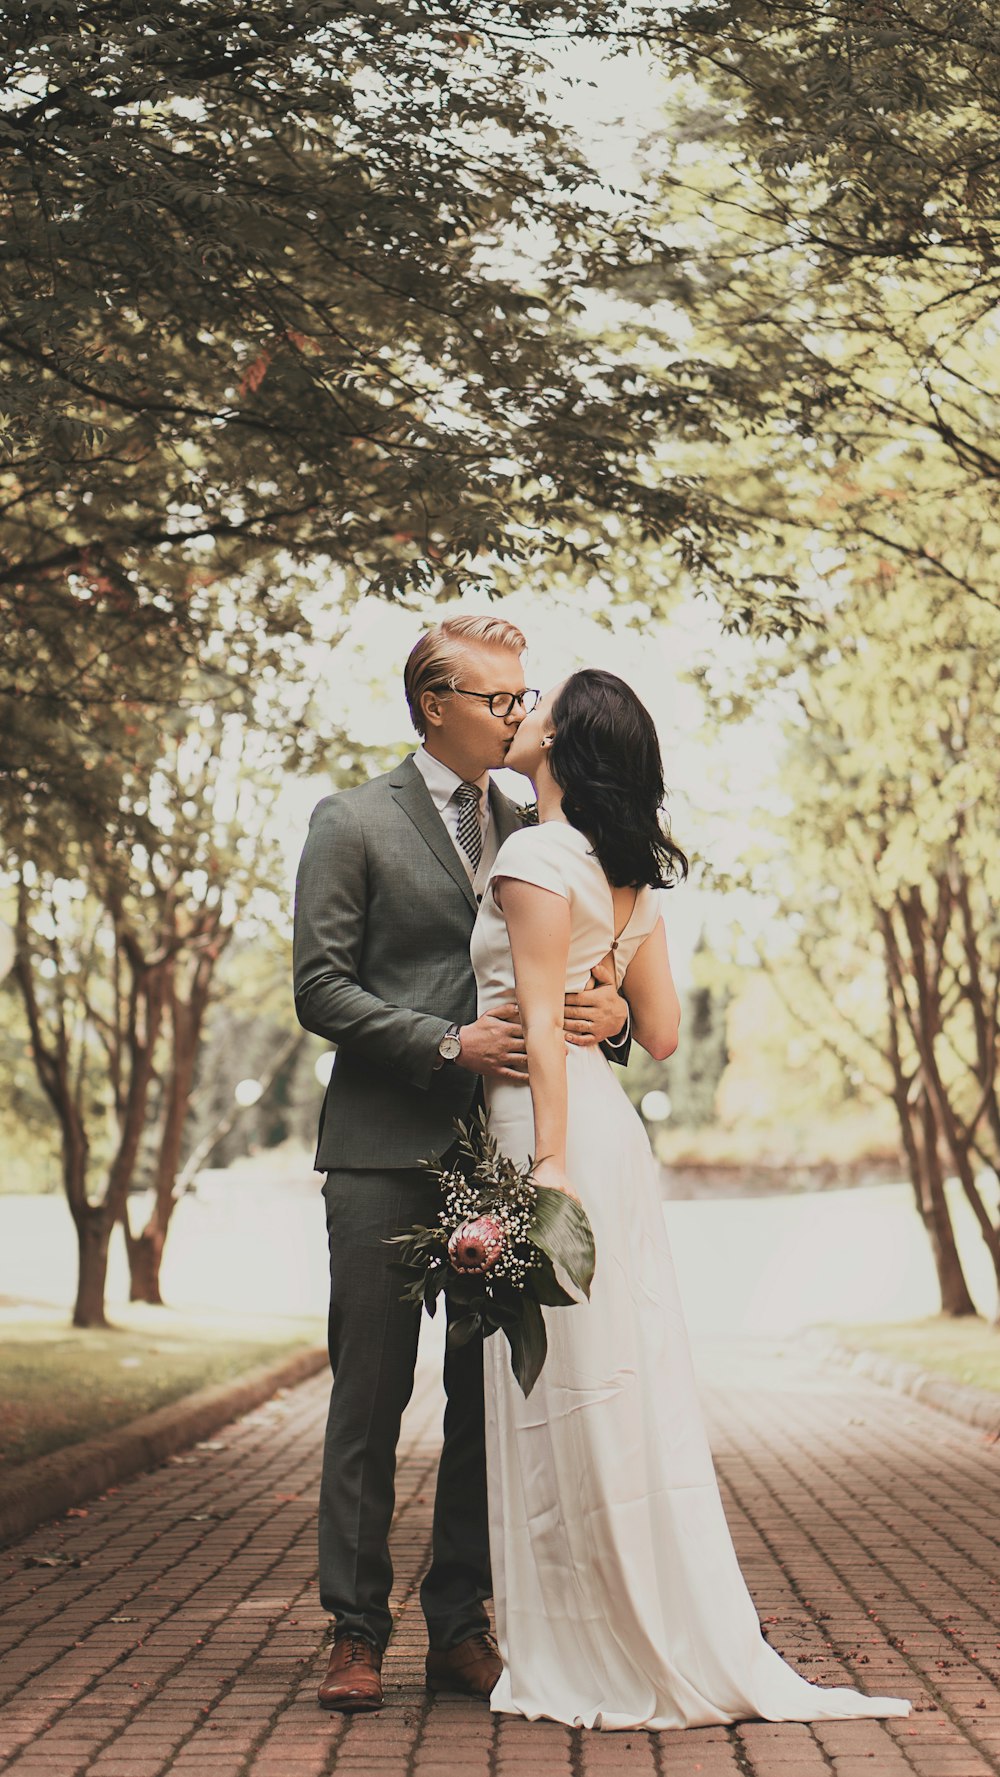 Man in black suit jacket kissing woman in white wedding dress during  daytime photo – Free Clothing Image on Unsplash